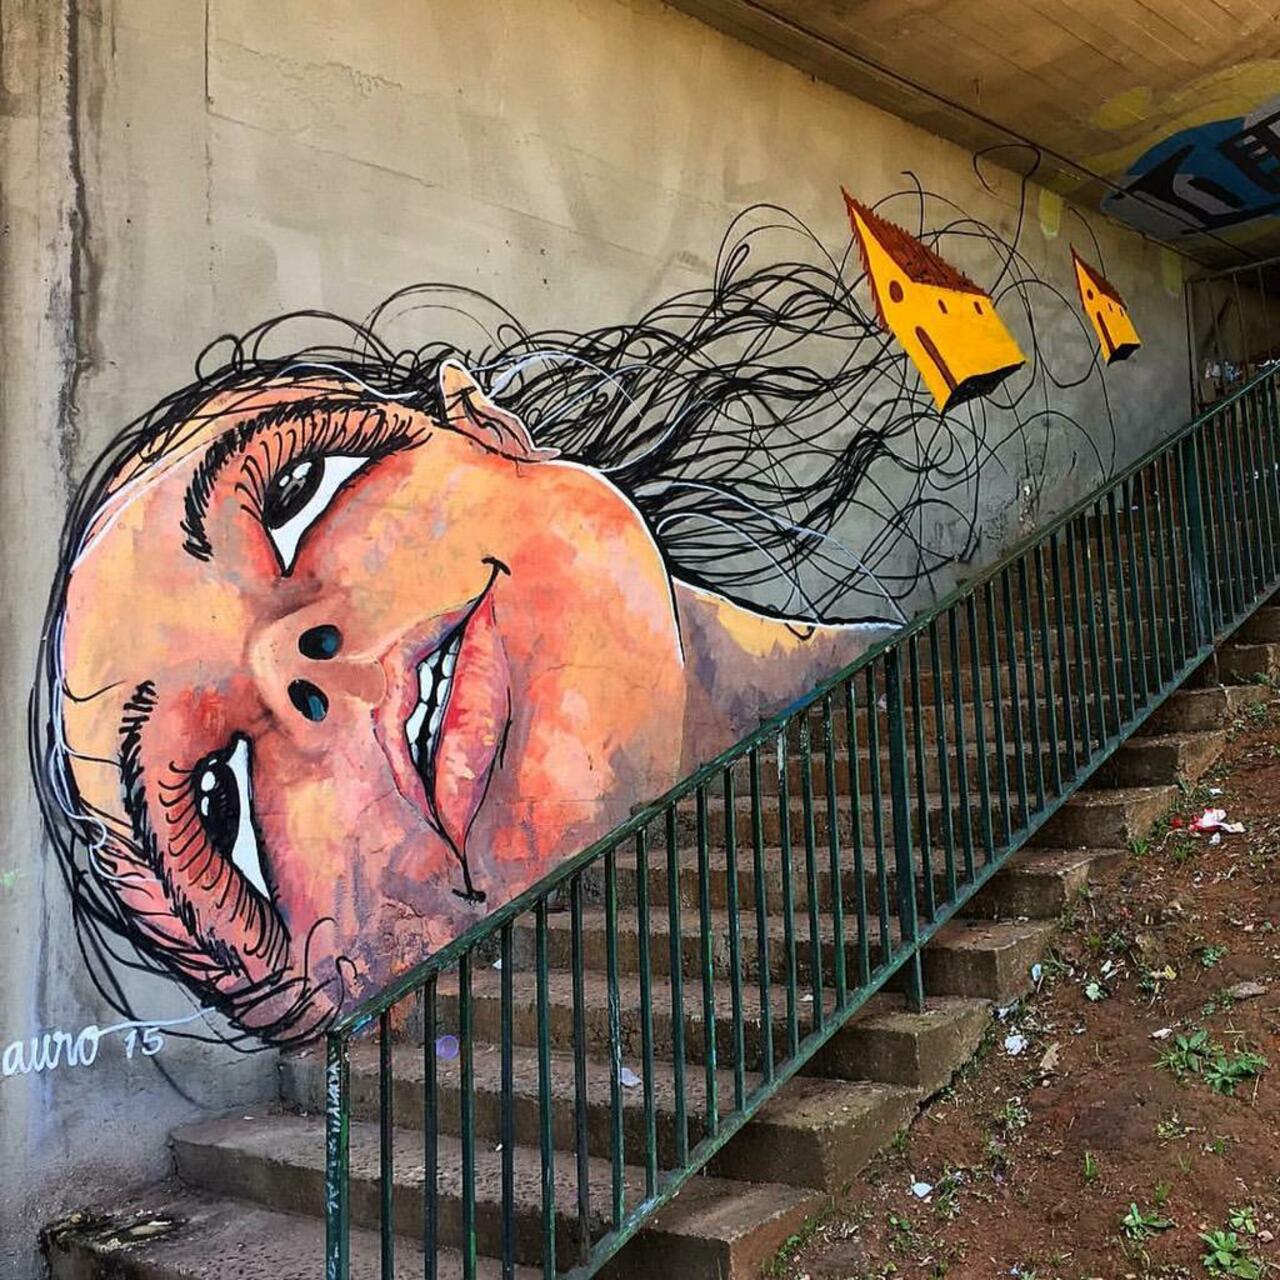 Street Art by Reveracidade in São Paulo 

#art #graffiti #mural #streetart http://t.co/YZlocJeGhw